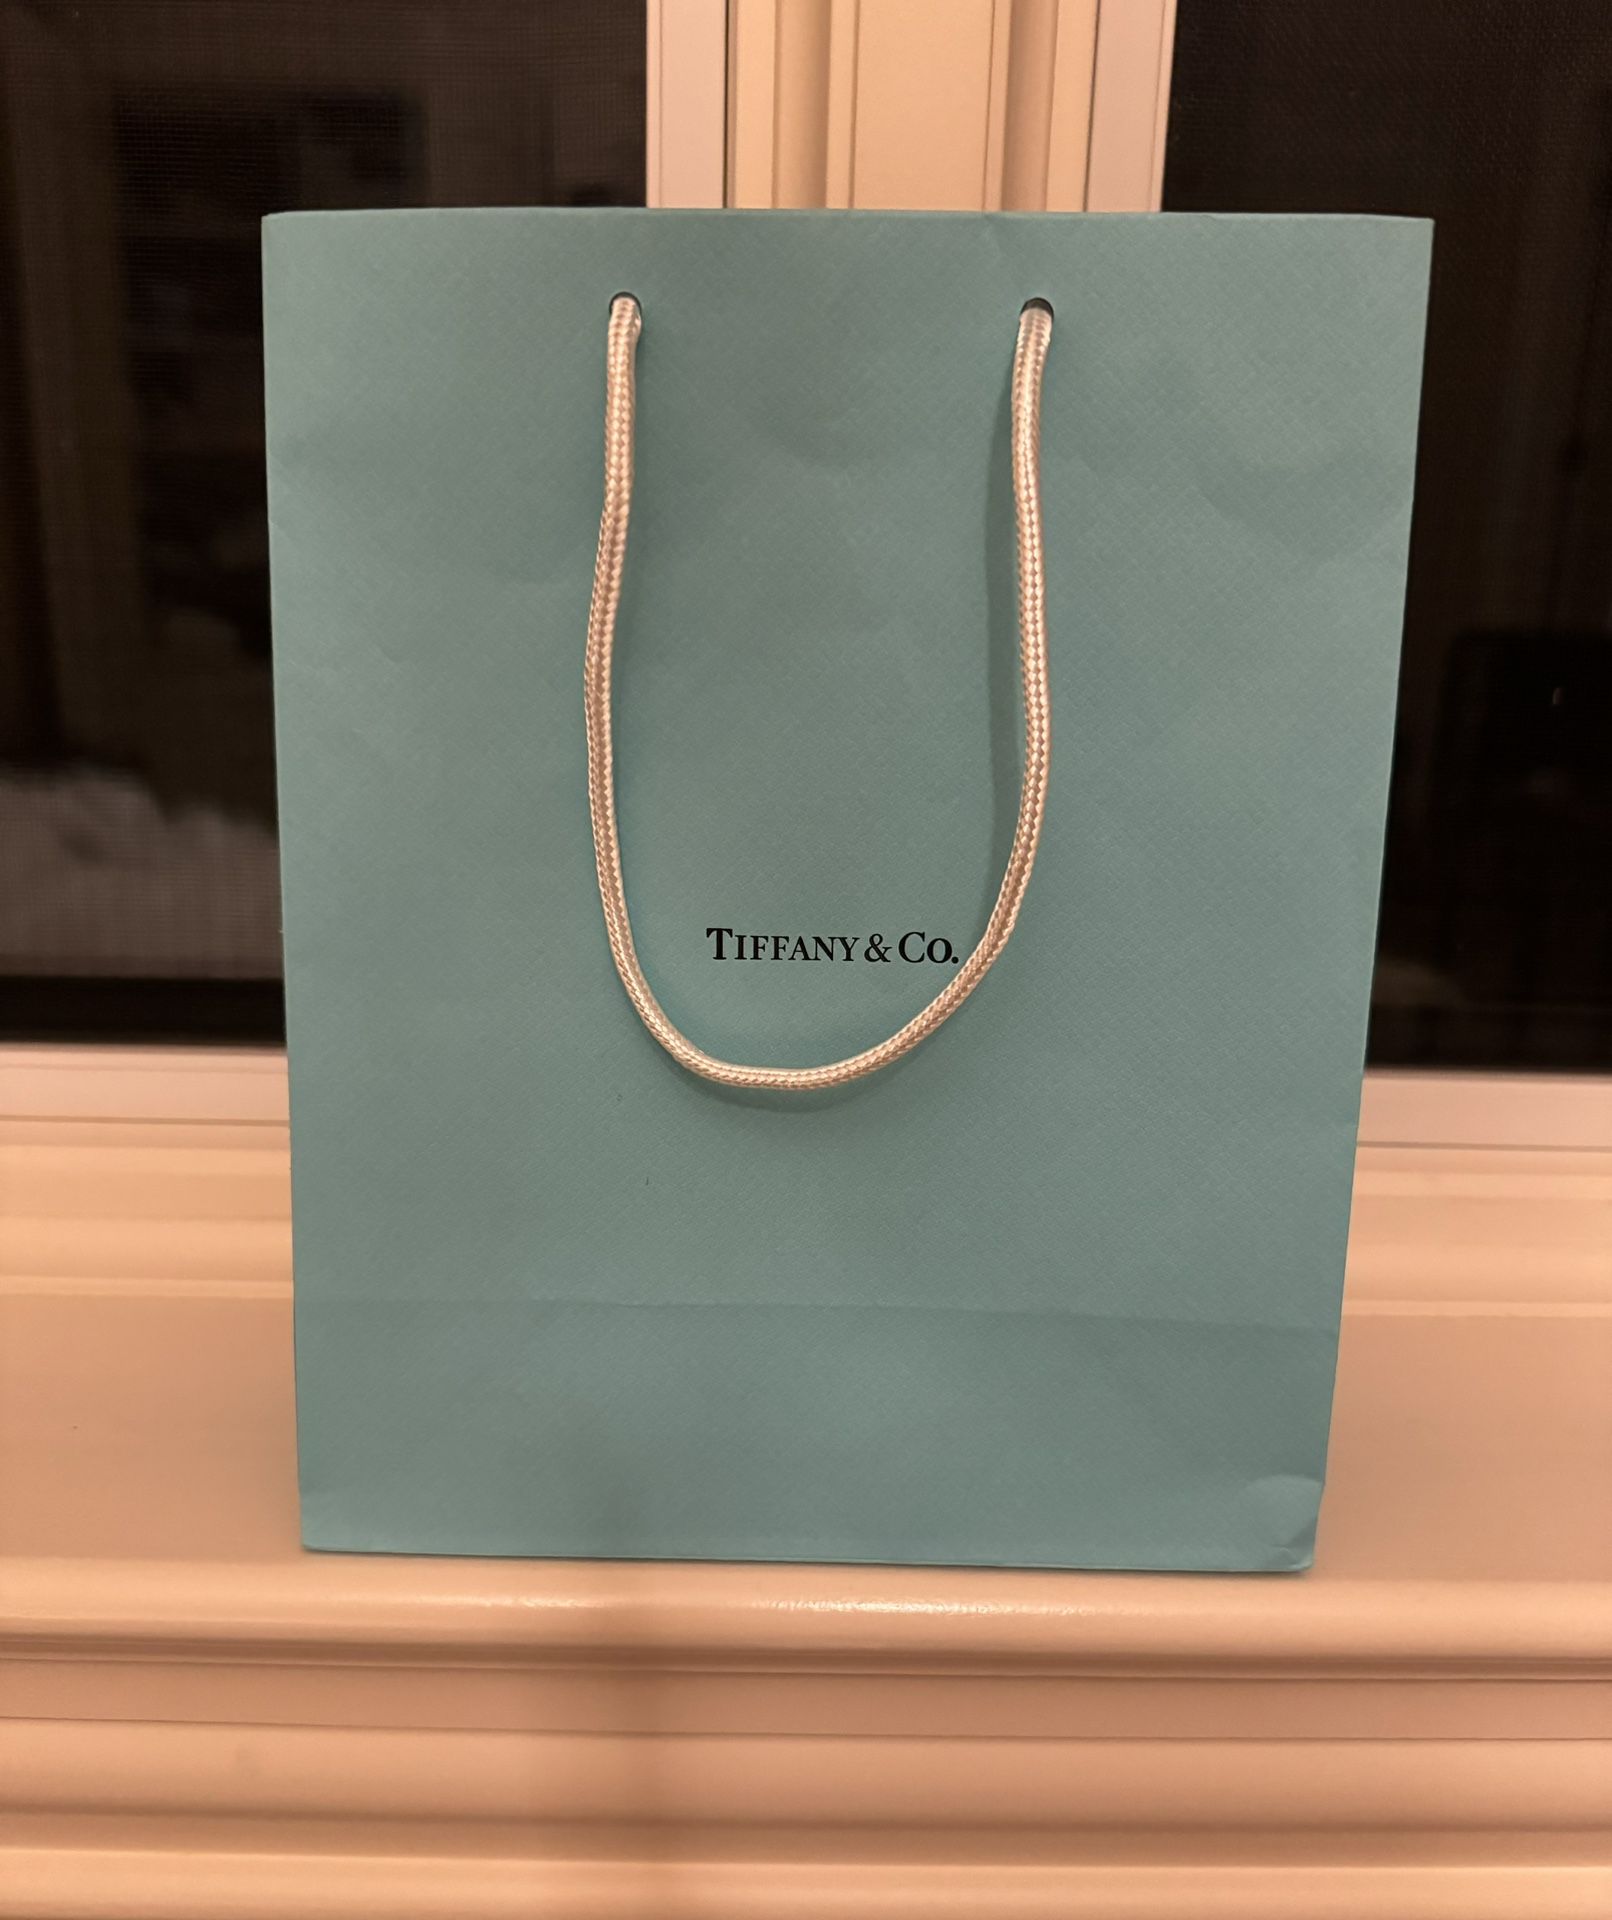 Tiffany & Co. Bag